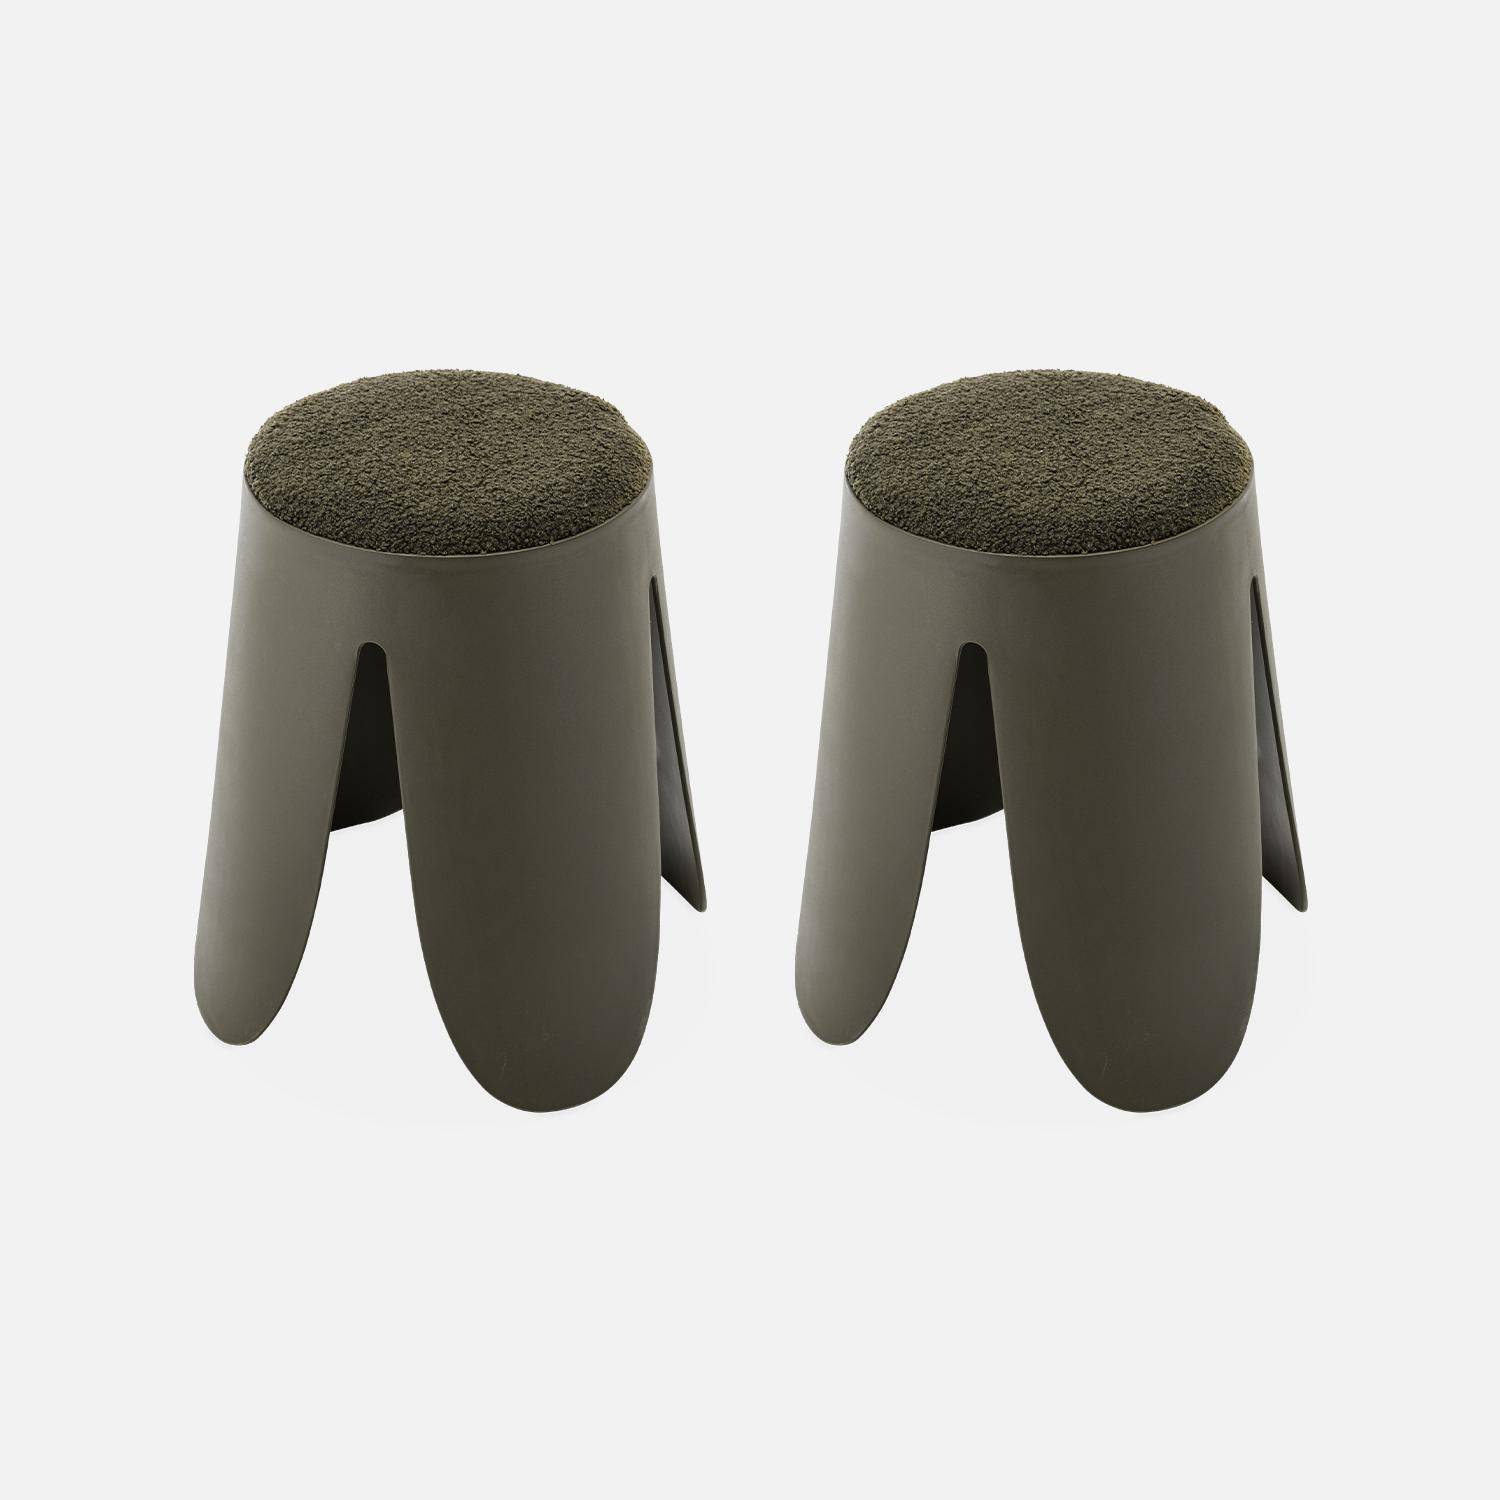  Conjunto de 2 taburetes apilables, asiento texturado,sweeek,Photo4